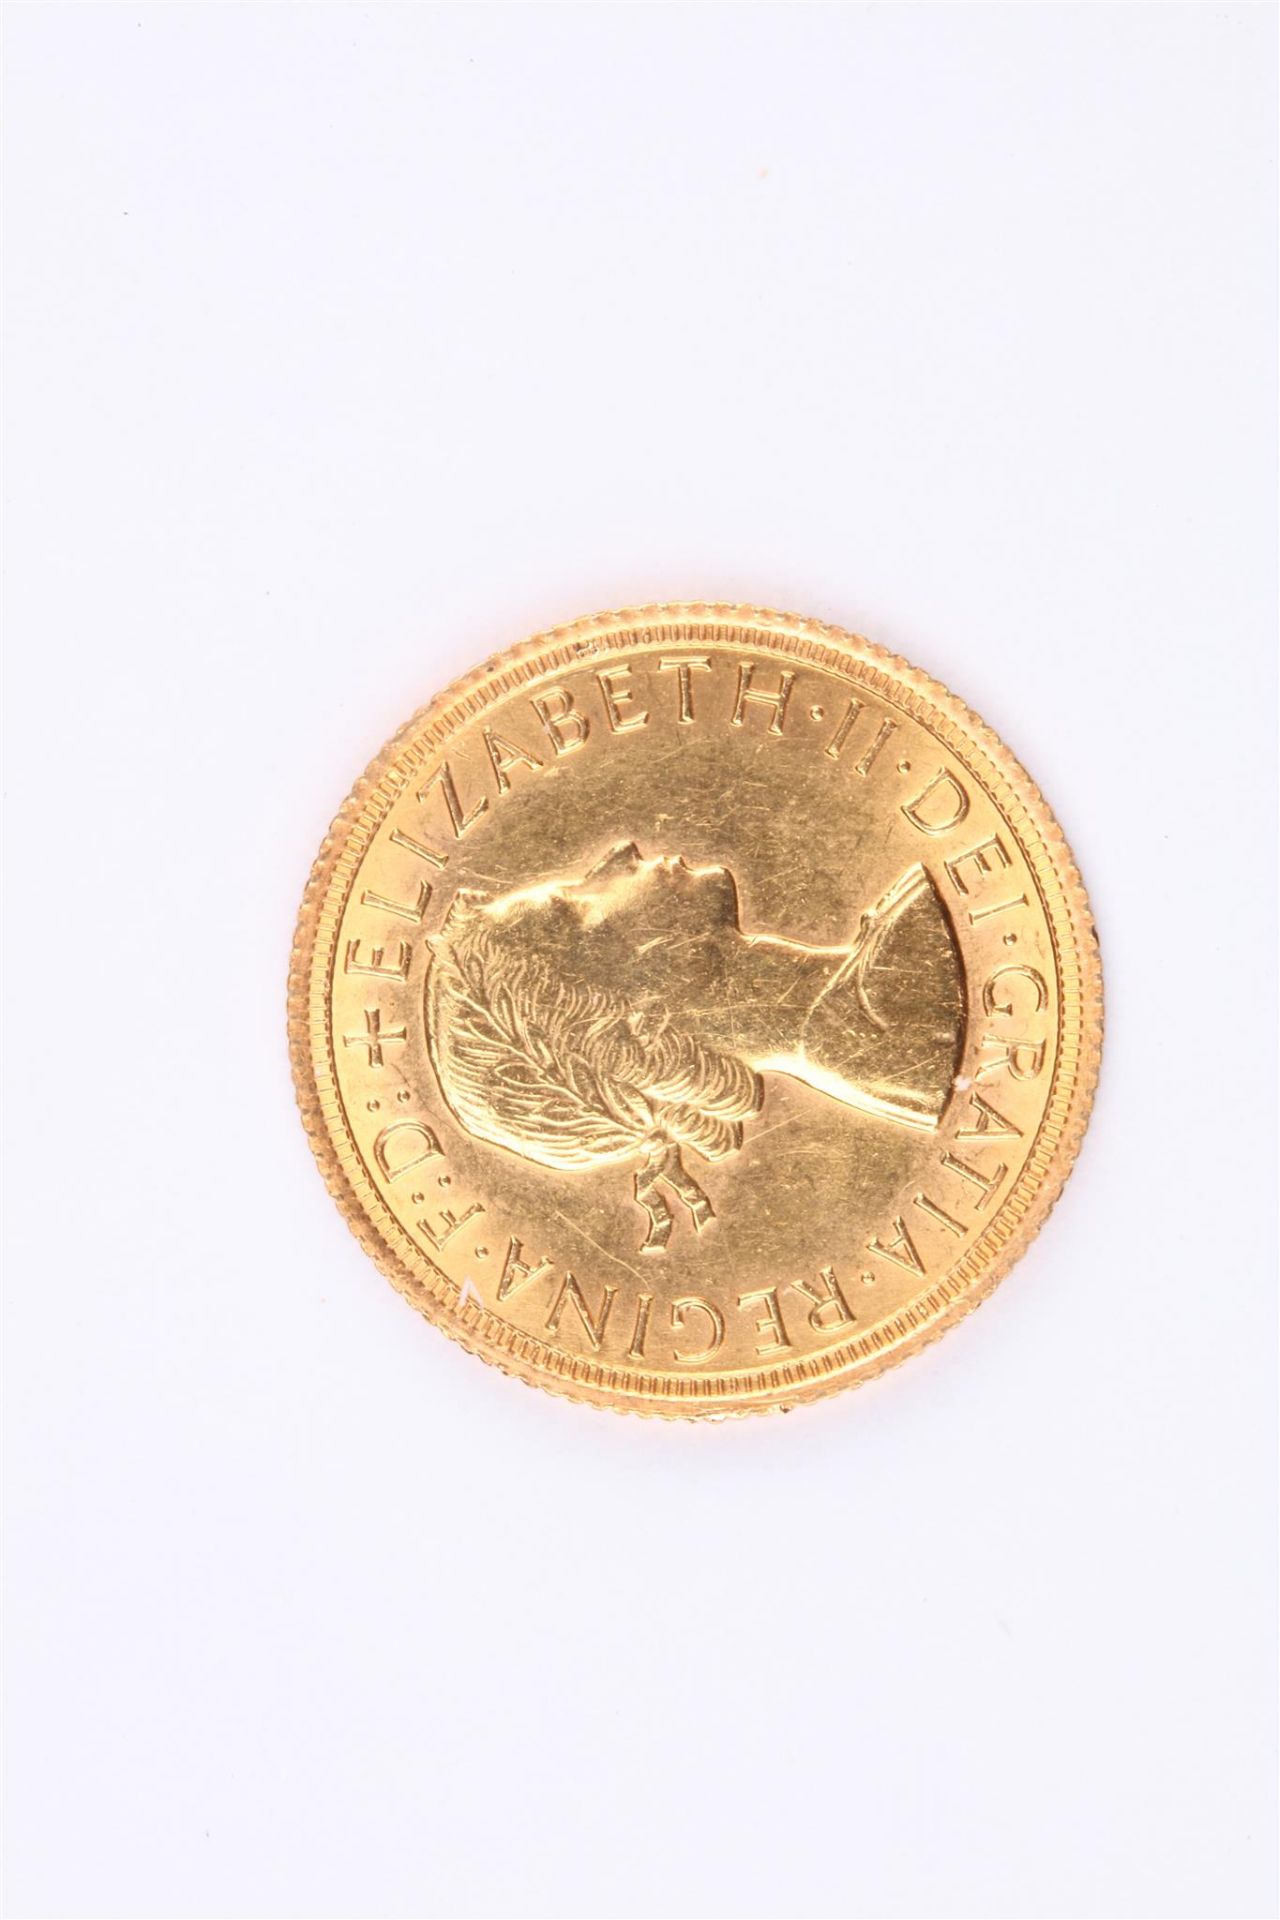 No VAT 1966 Gold Full Sovereign